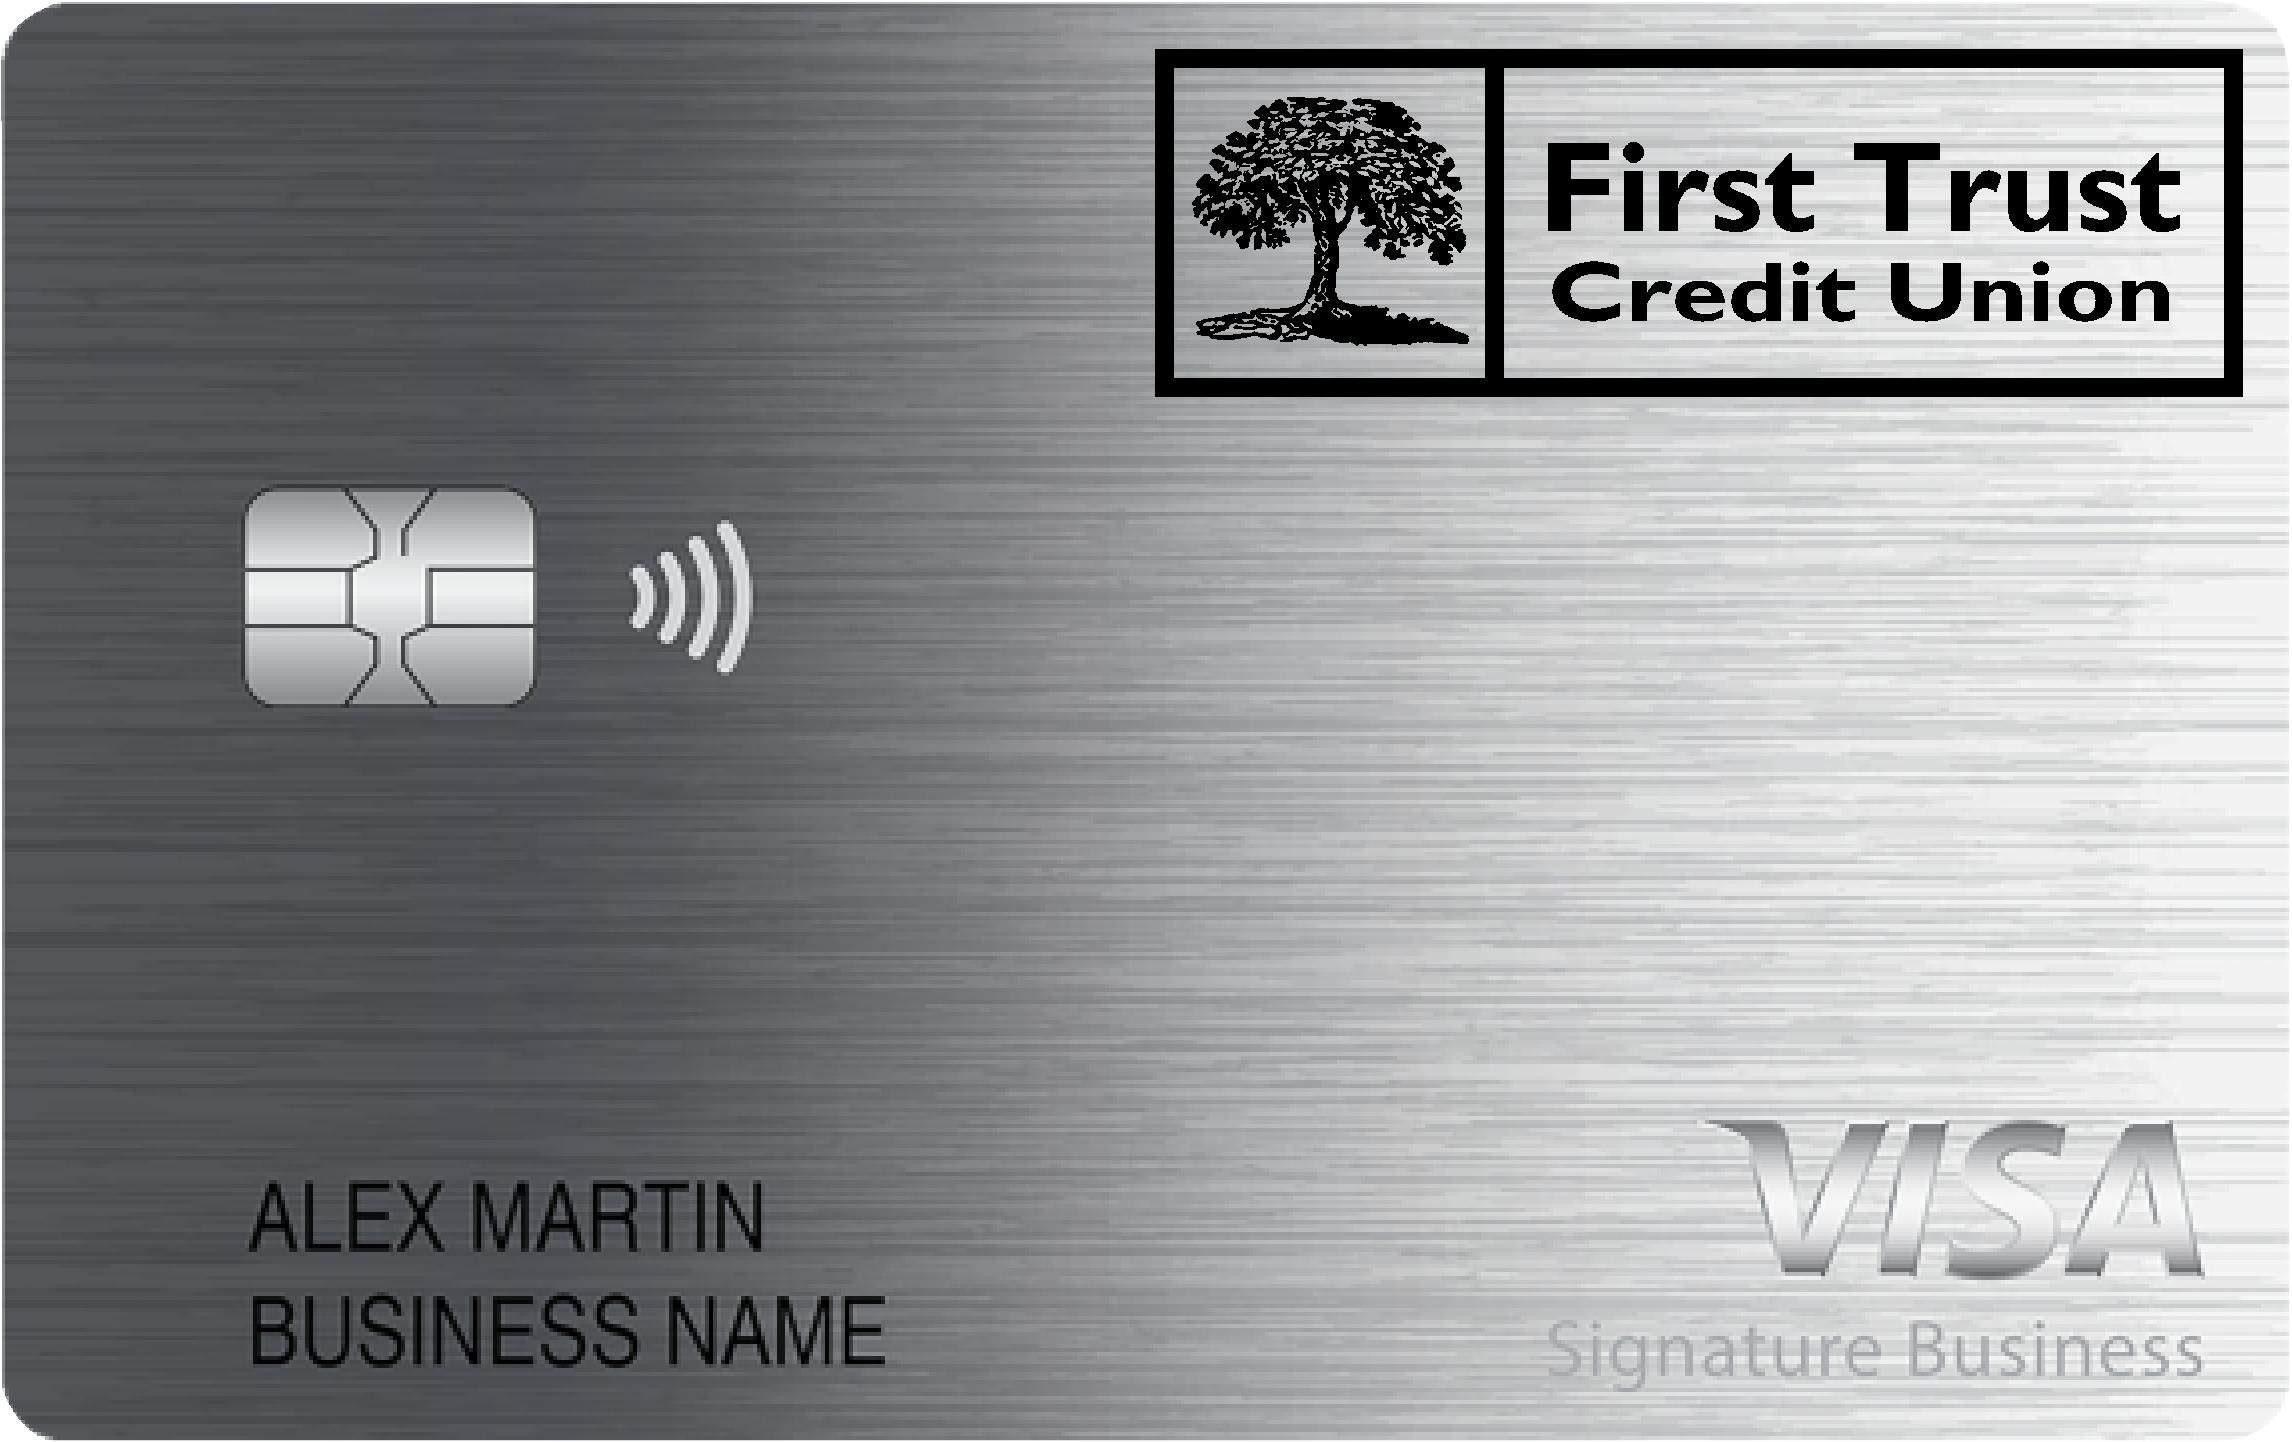 First Trust Credit Union Smart Business Rewards Card